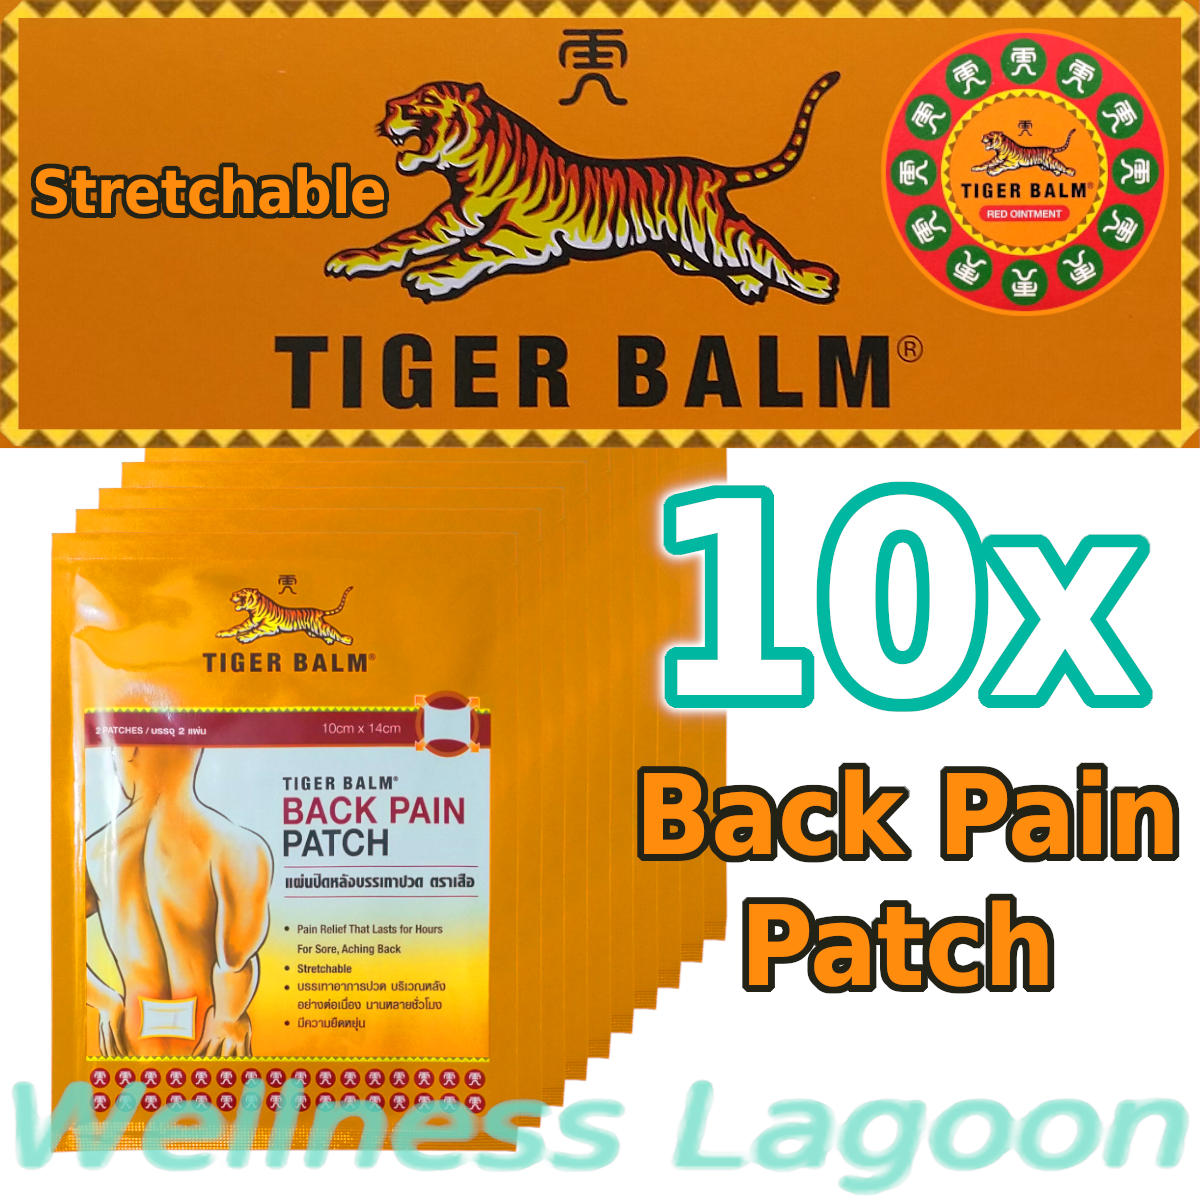 10x Tiger Balm Back Pain Patch - Stretchable (10cm x 14cm)